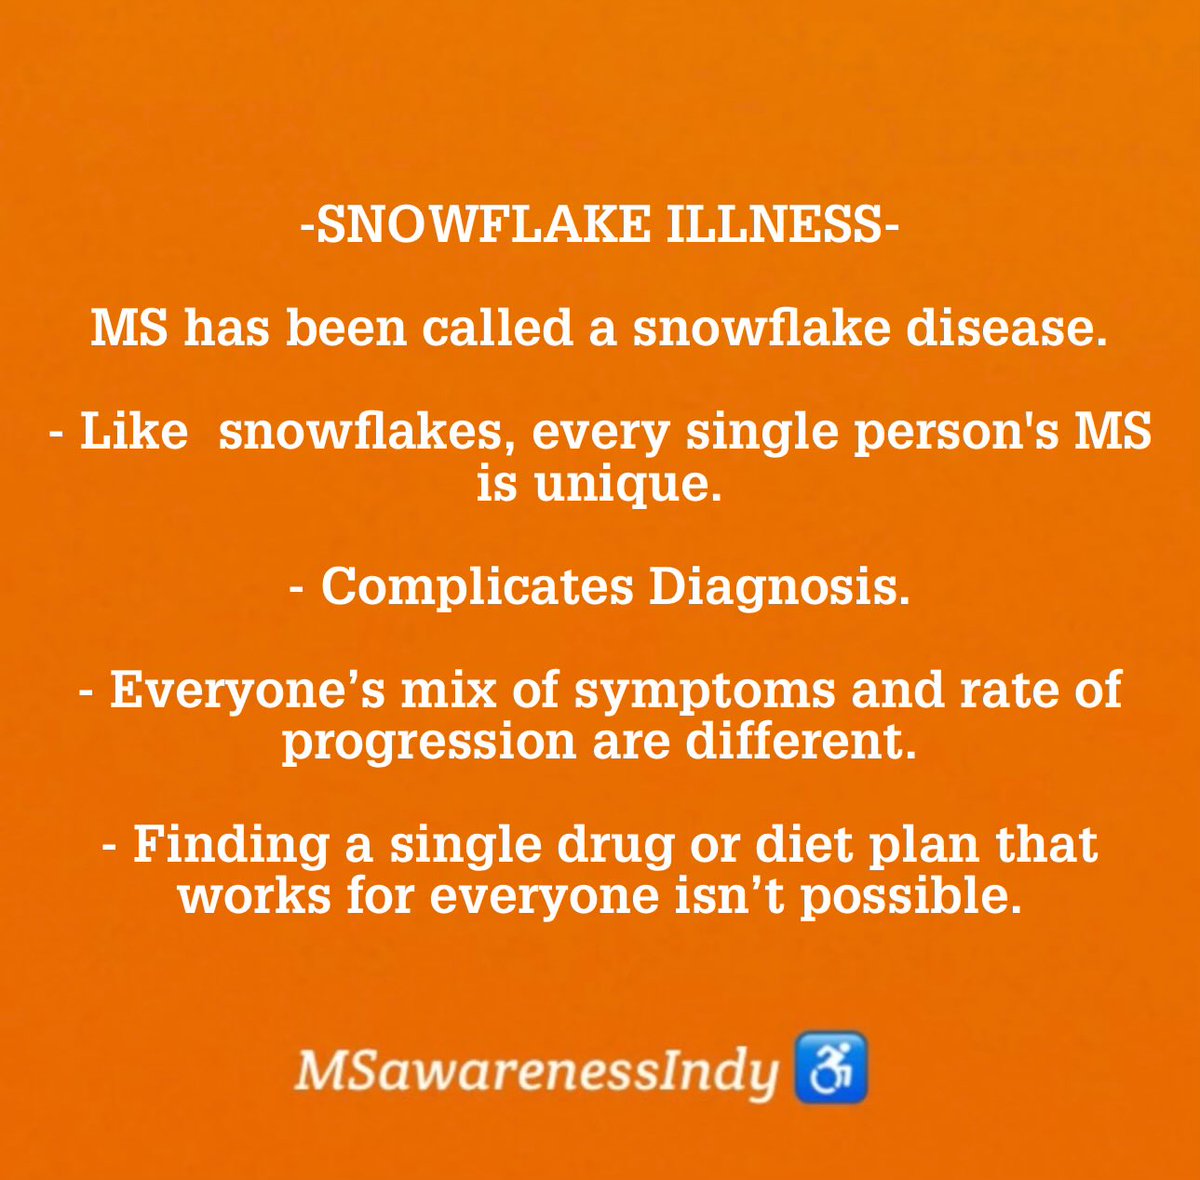 Chronic Illness #TermOfTheDay 

-SNOWFLAKE ILLNESS-